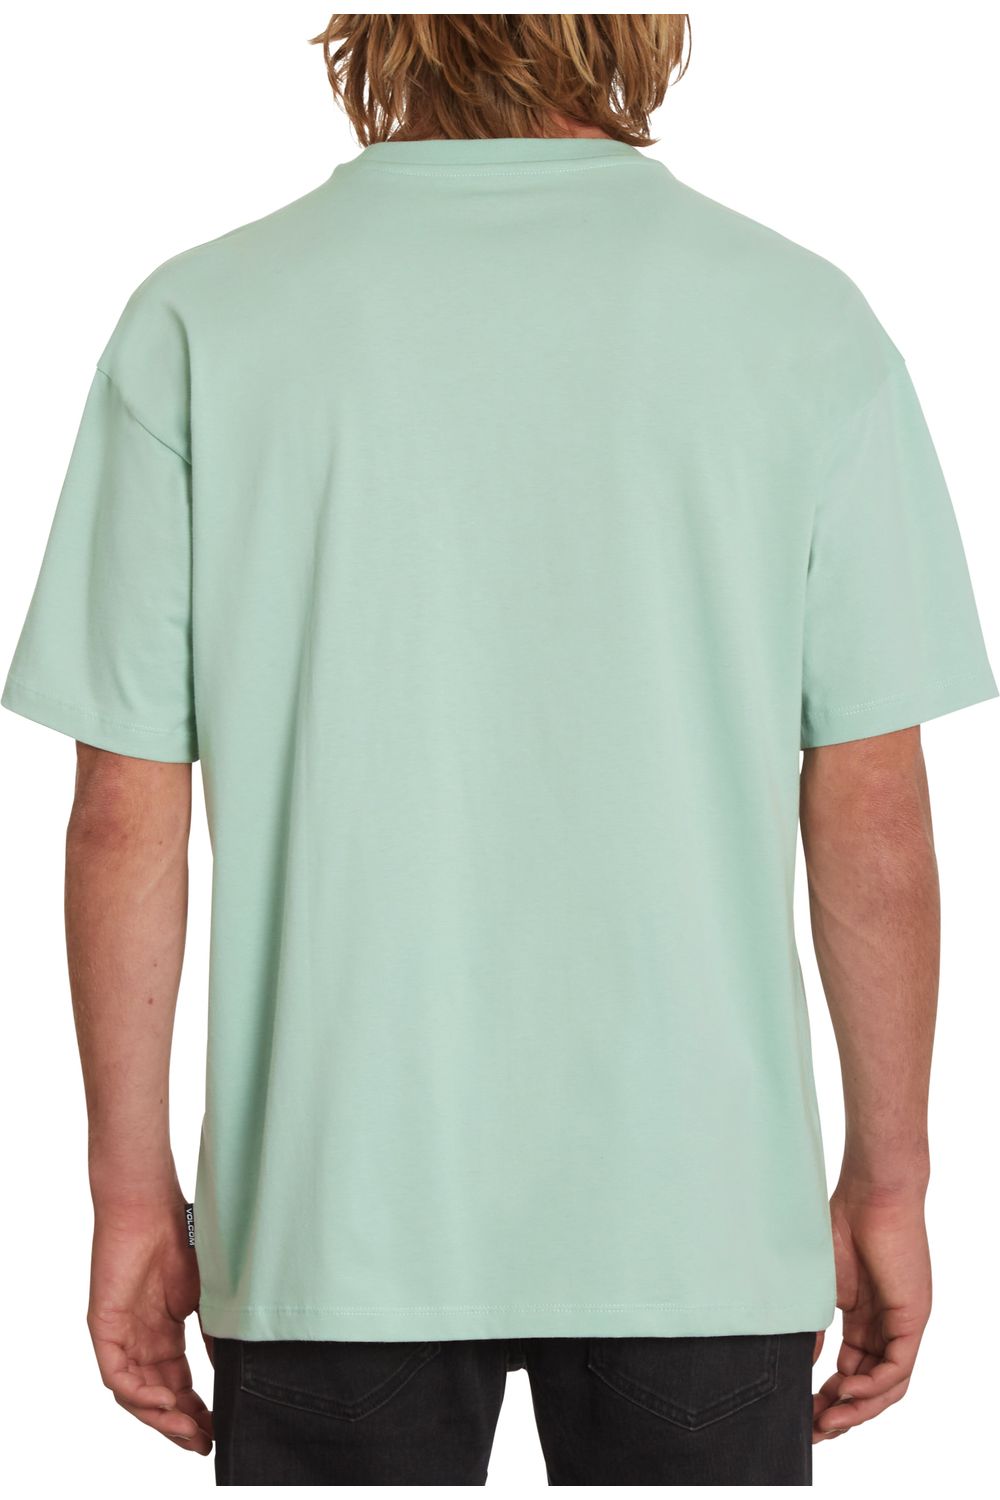 Volcom Fa C.Abbottxfrench Lse Short Sleeve T-Shirt Lichen Green